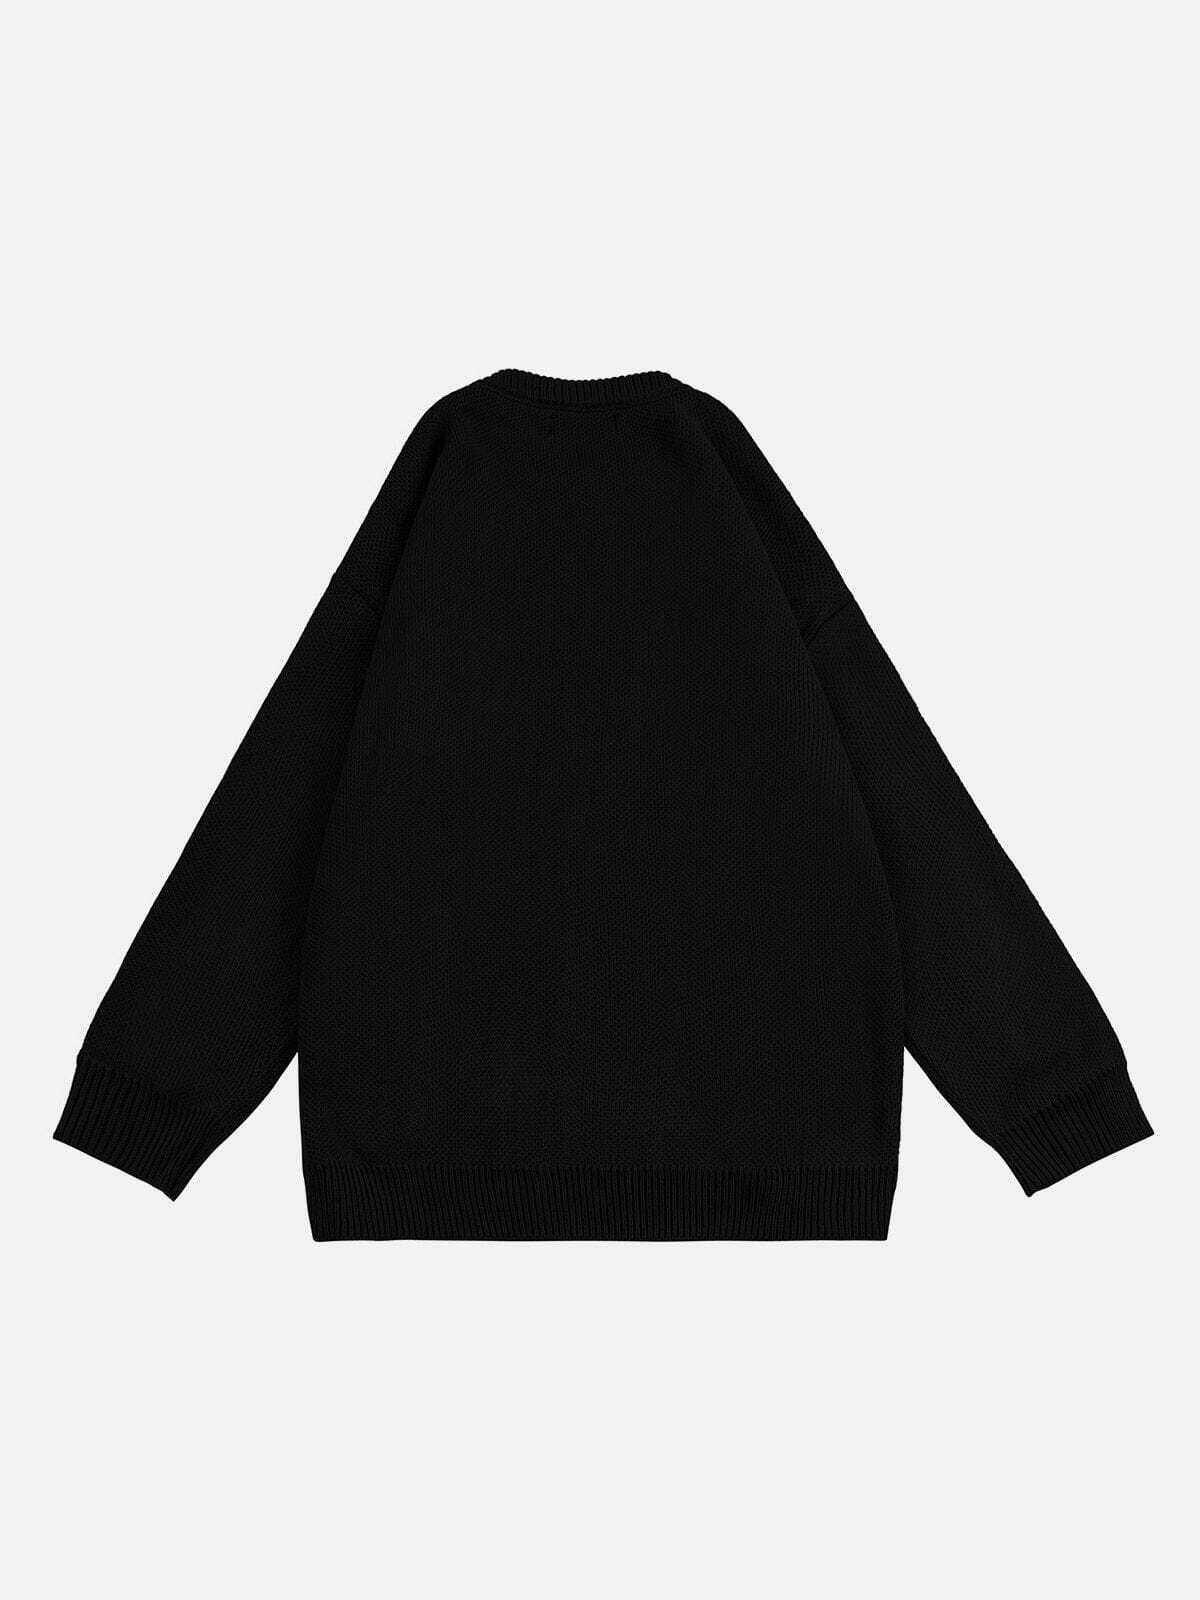 pentagram patchwork sweater edgy streetwear statement 5907